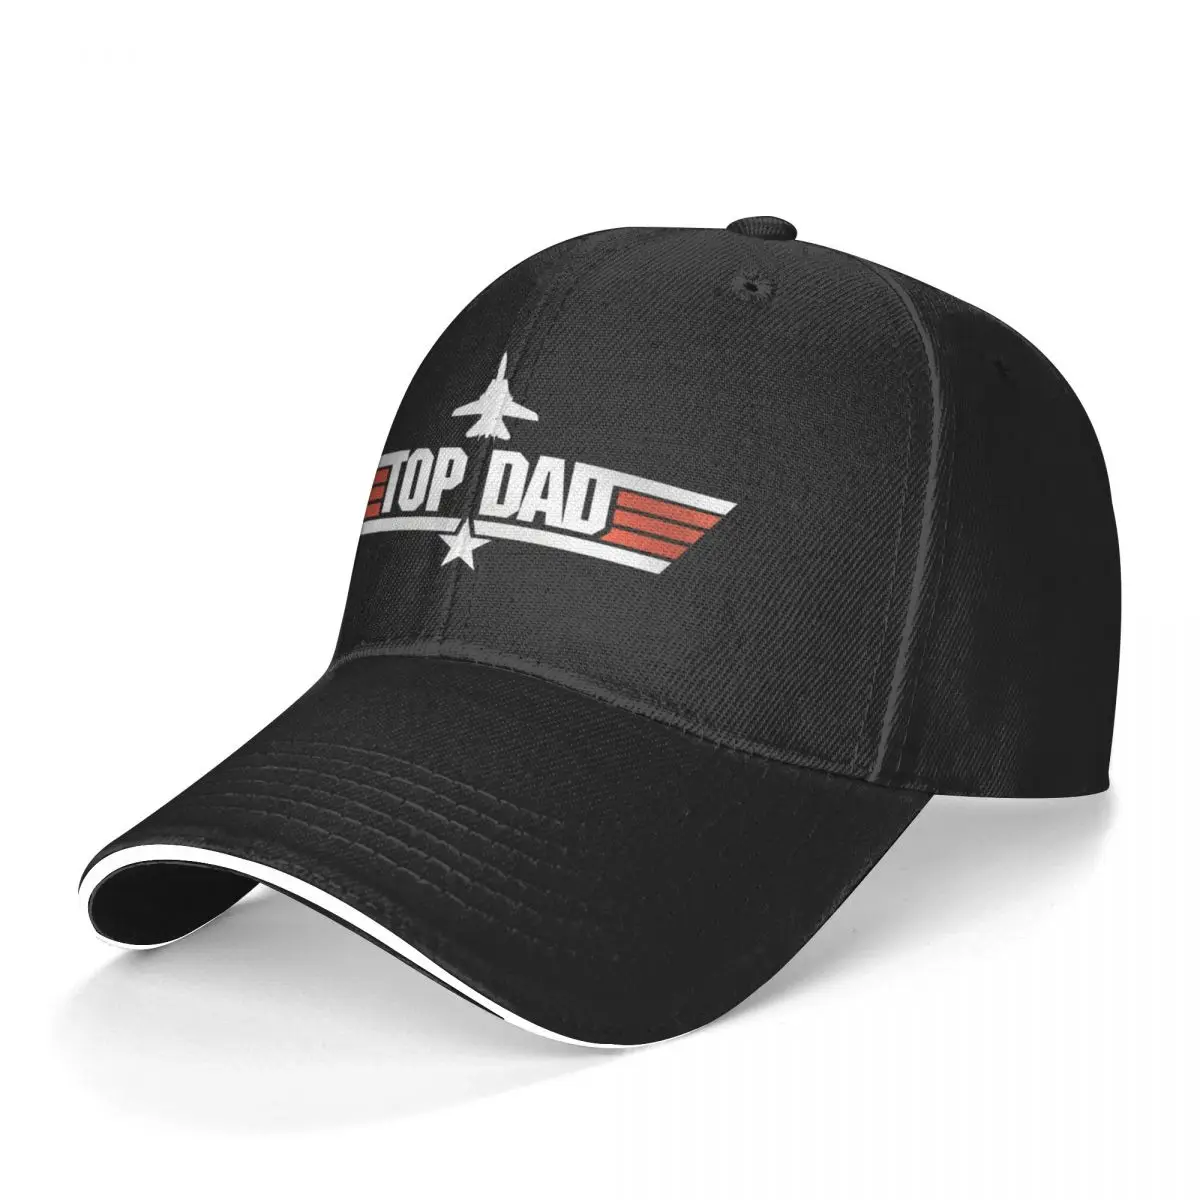 Aviator Pilot Baseball Cap Top Gun Style Top Dad Outdoor Dropshipping Hip Hop Hats Stylish Printed Unisex Snapback Cap